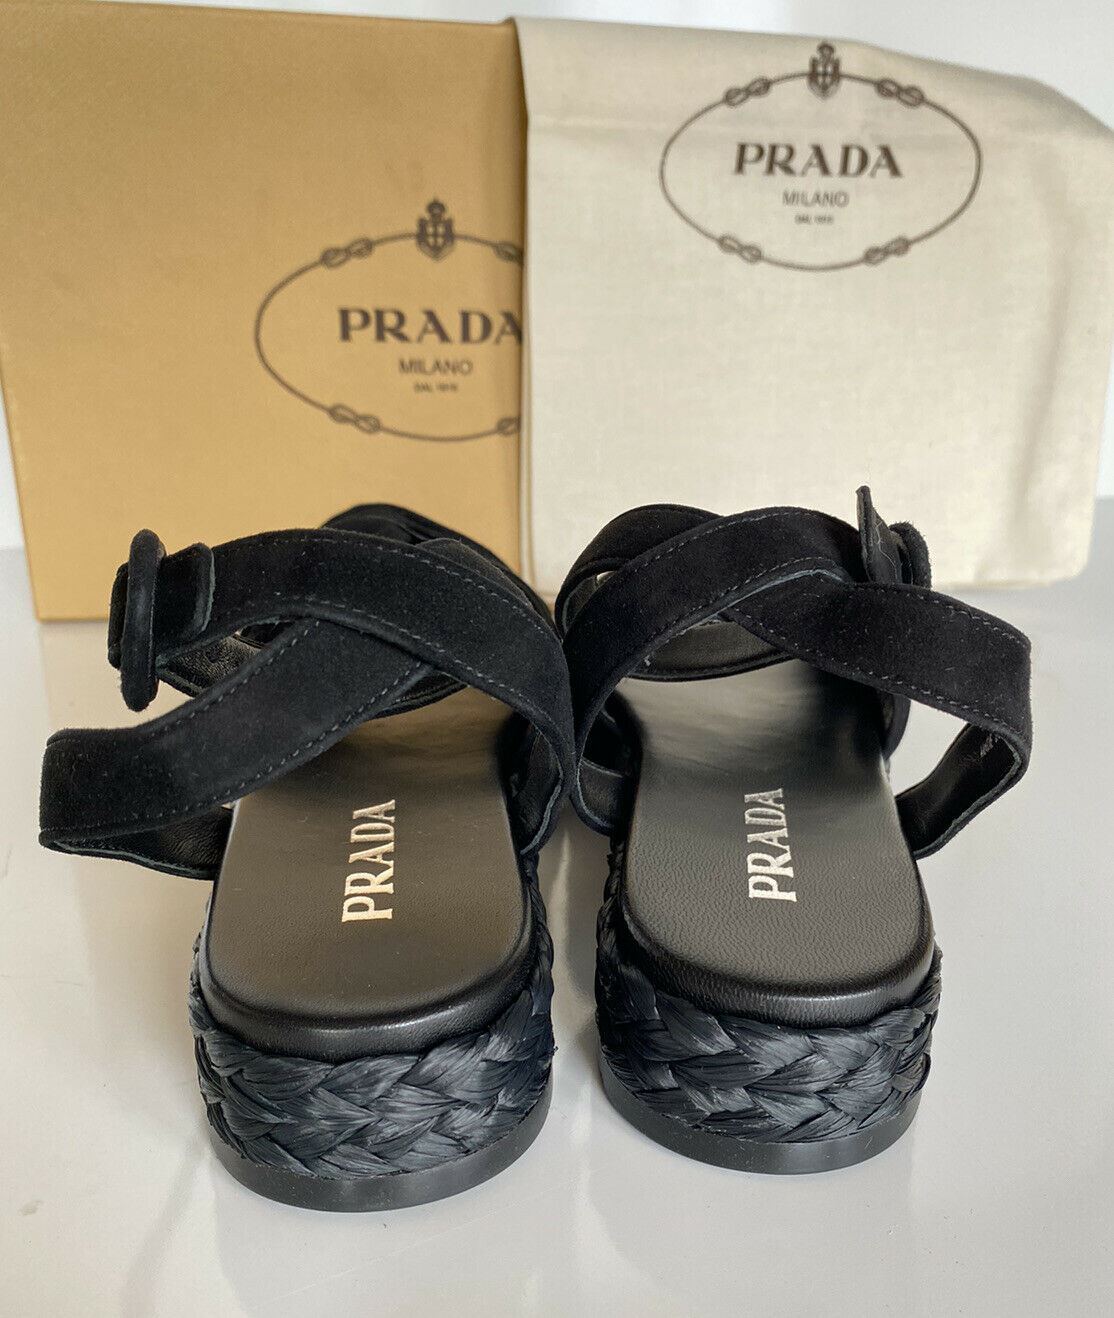 NIB Prada Women's Black Suede Espadrille Sandal 7.5 US 1X360L Italy